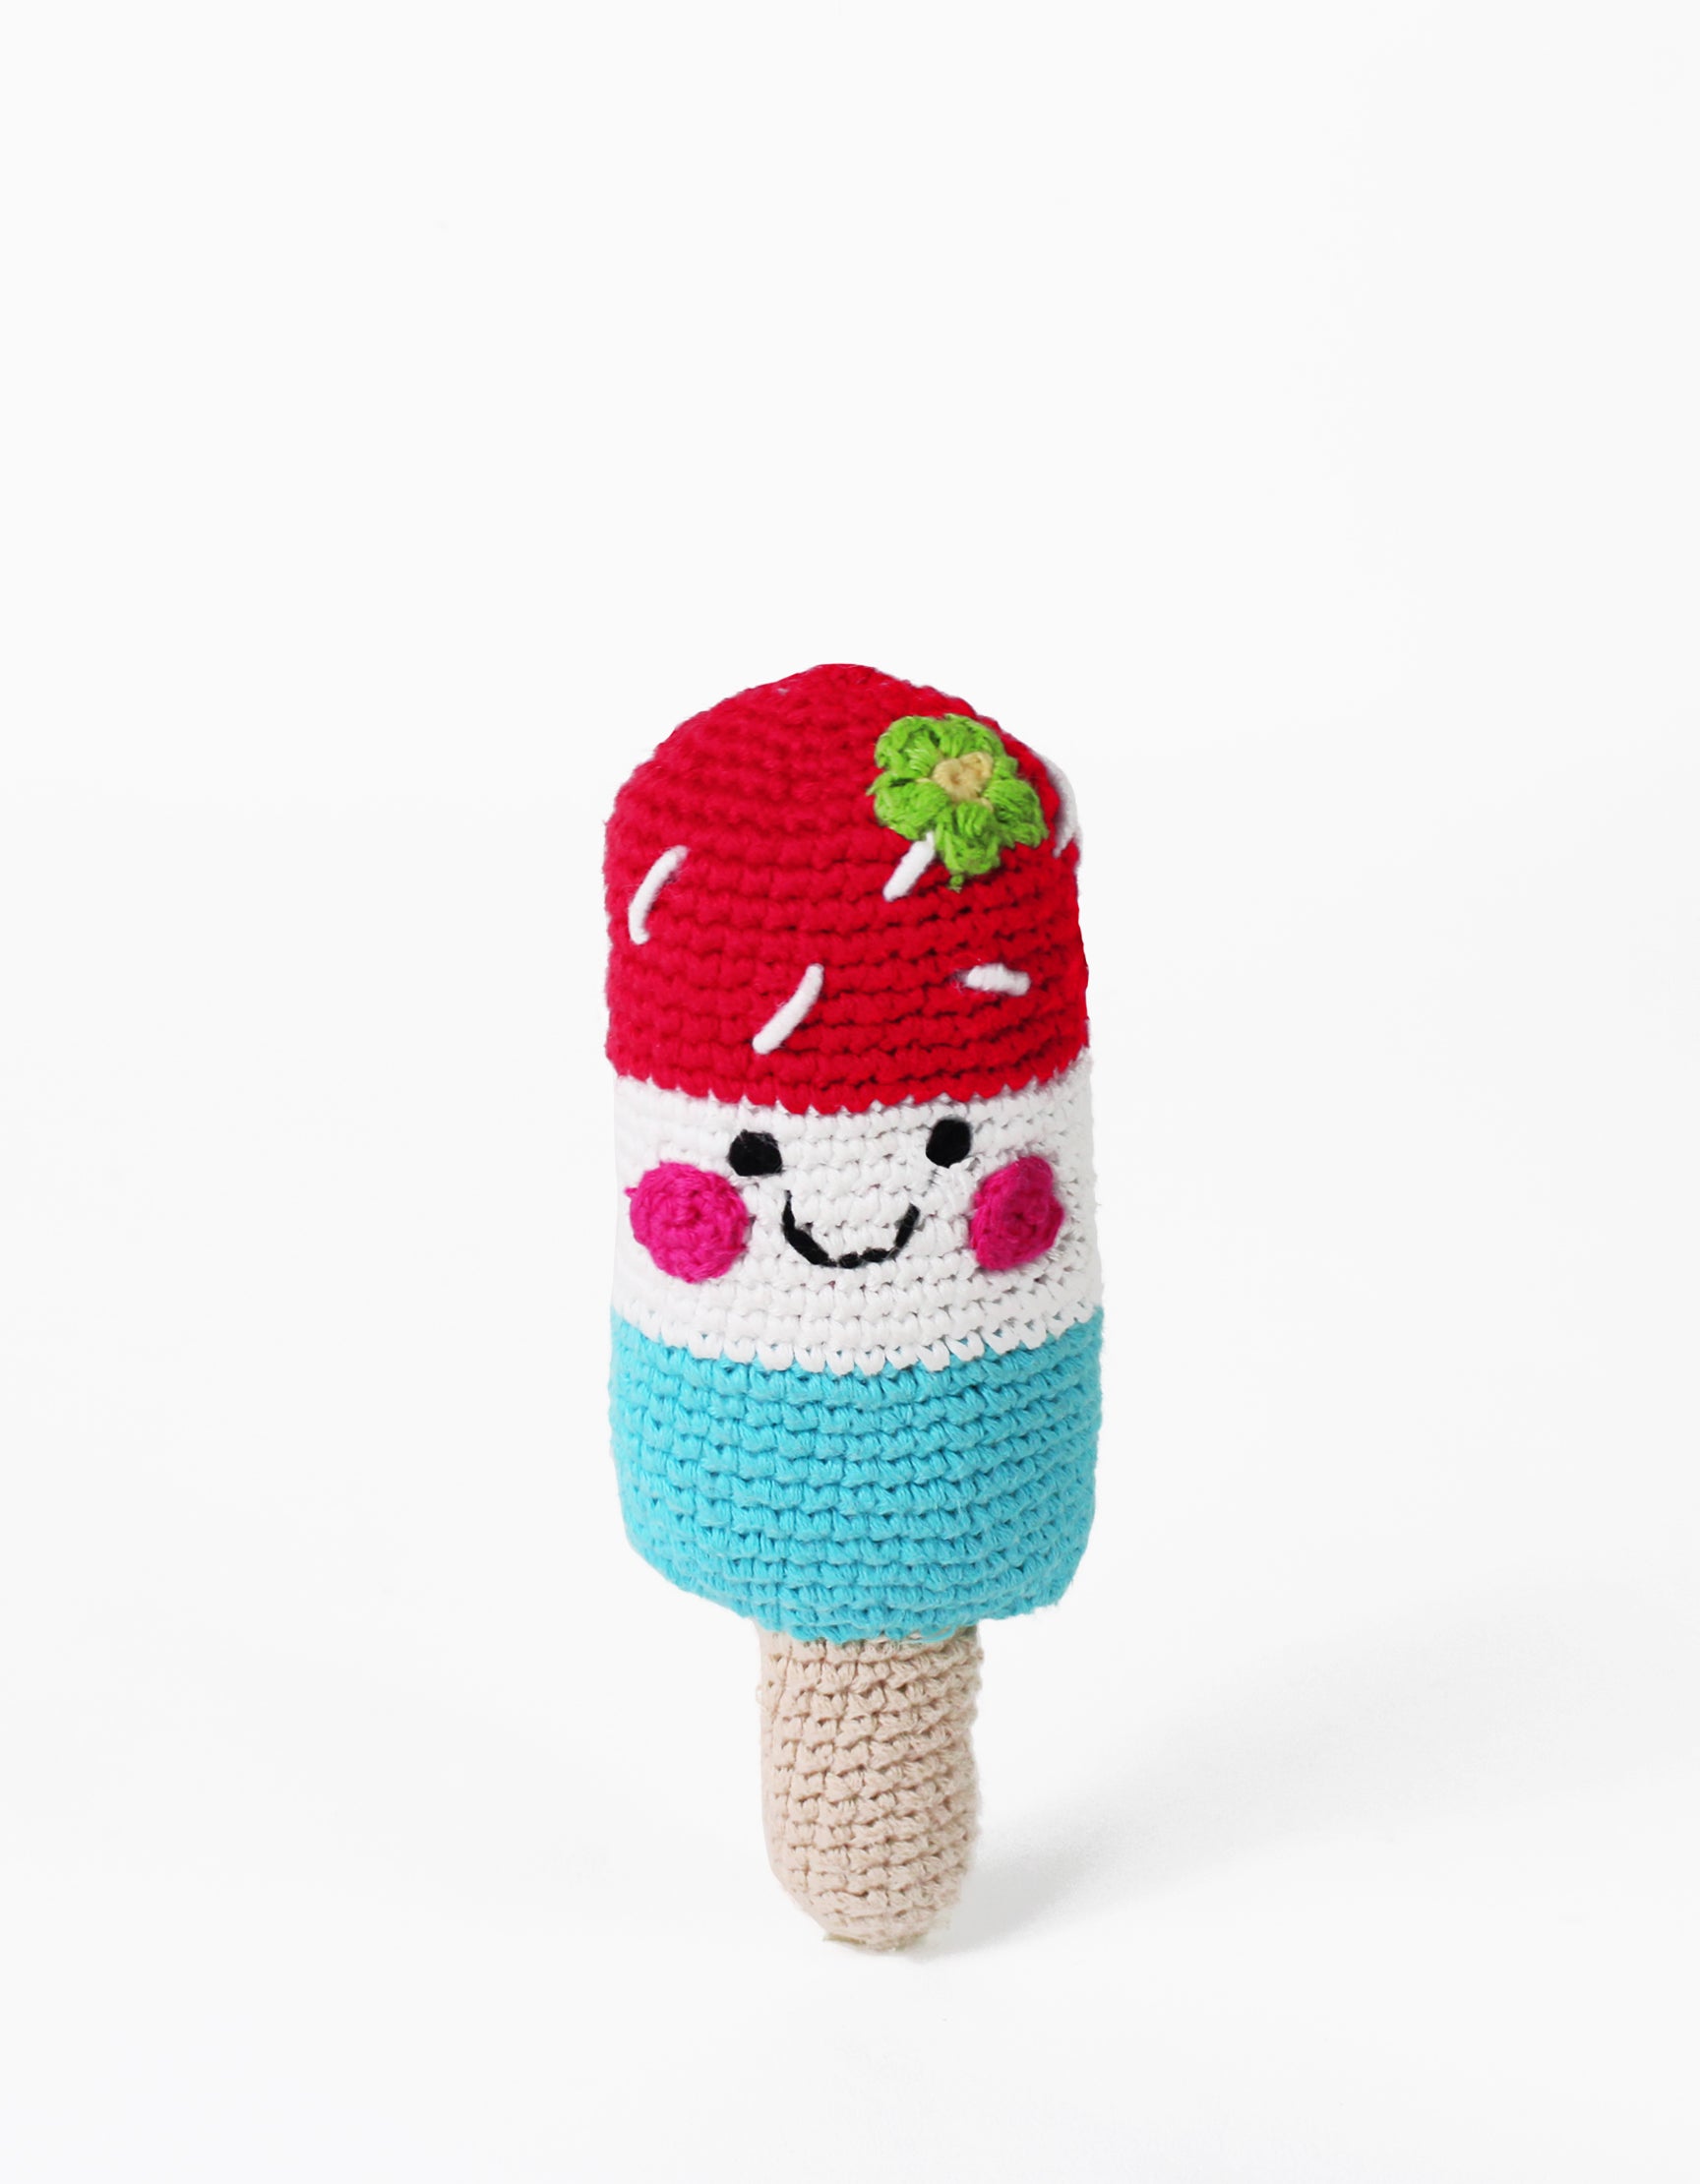 Crochet Ice Lolly